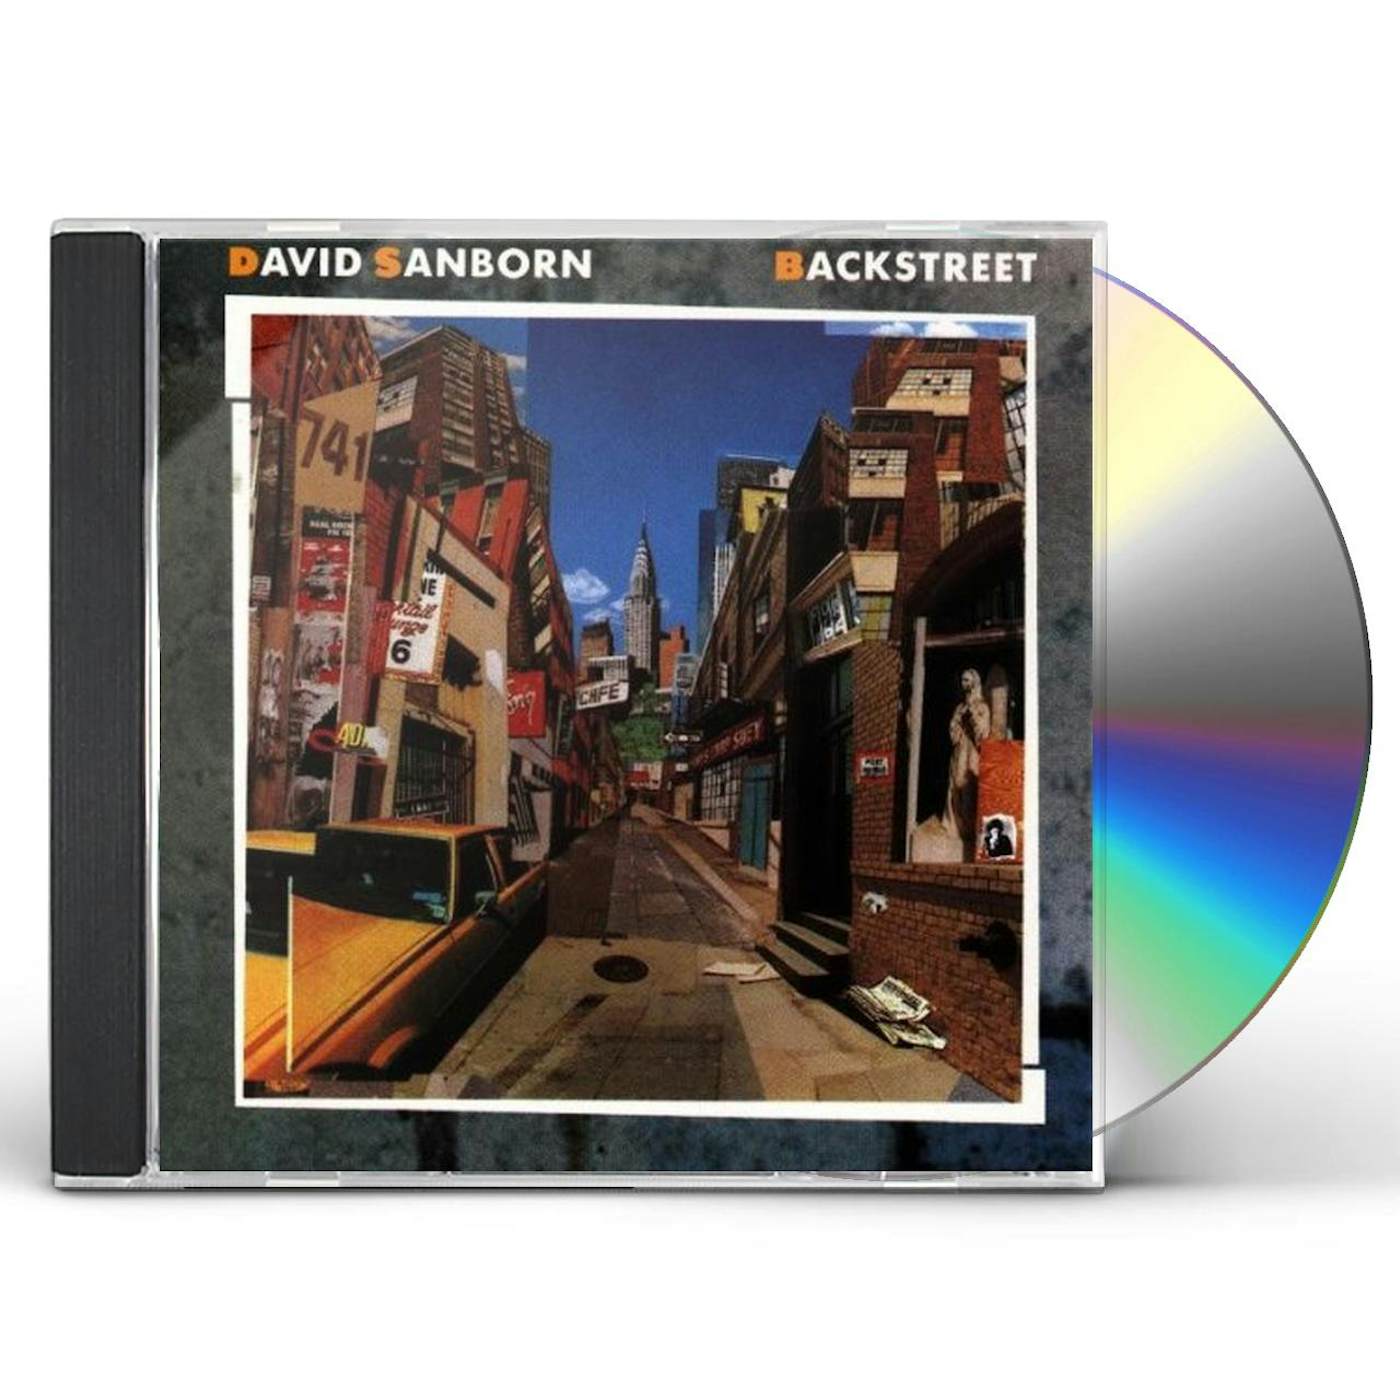 David Sanborn BACKSTREET CD